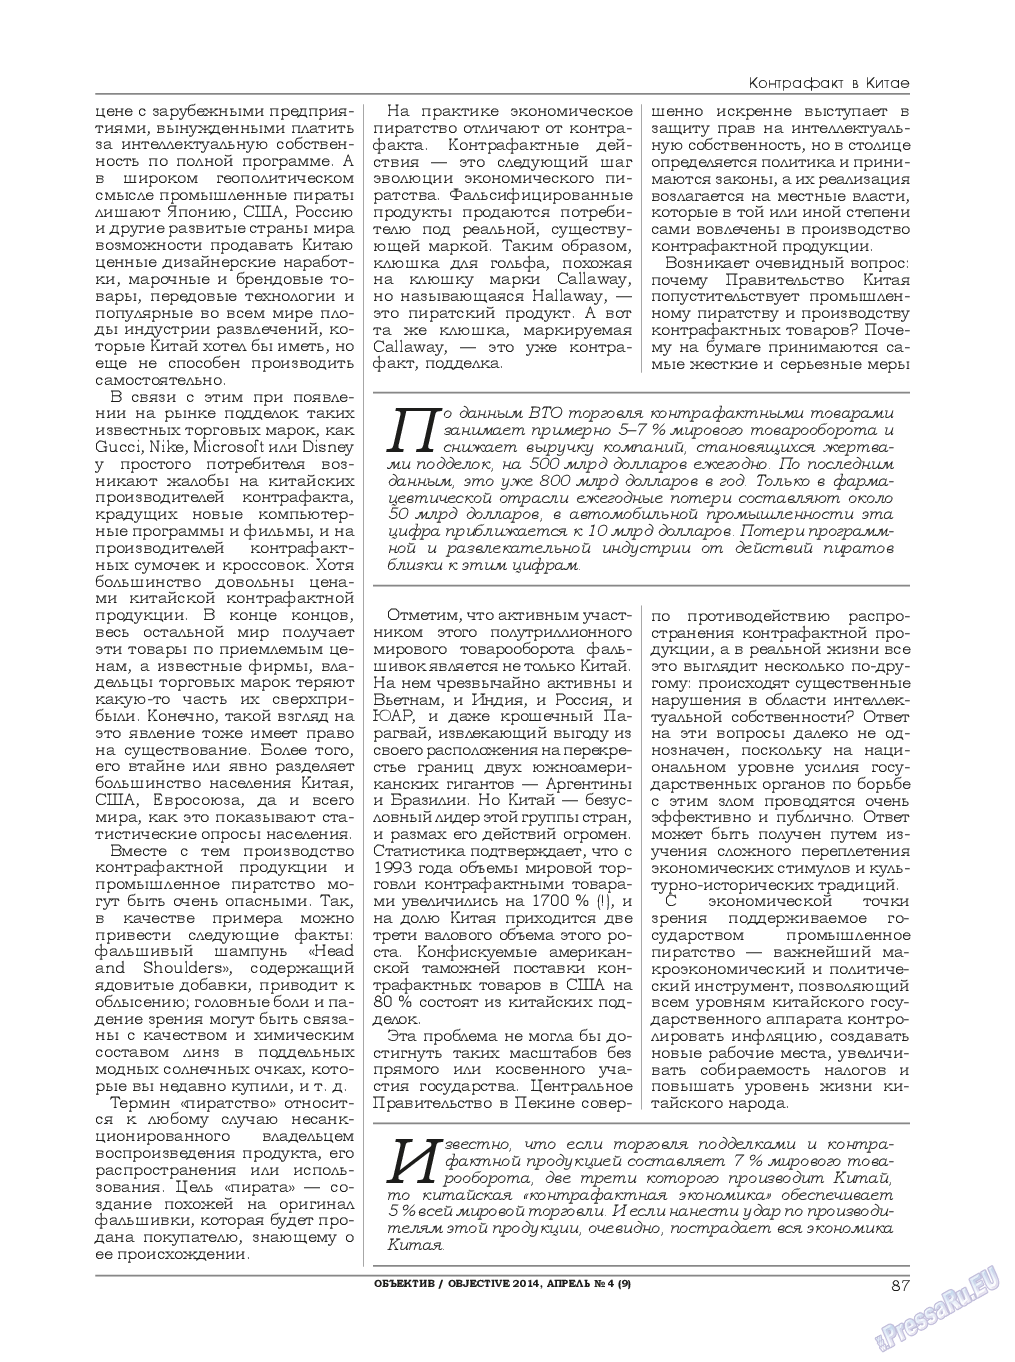 Объектив EU, журнал. 2014 №4 стр.87